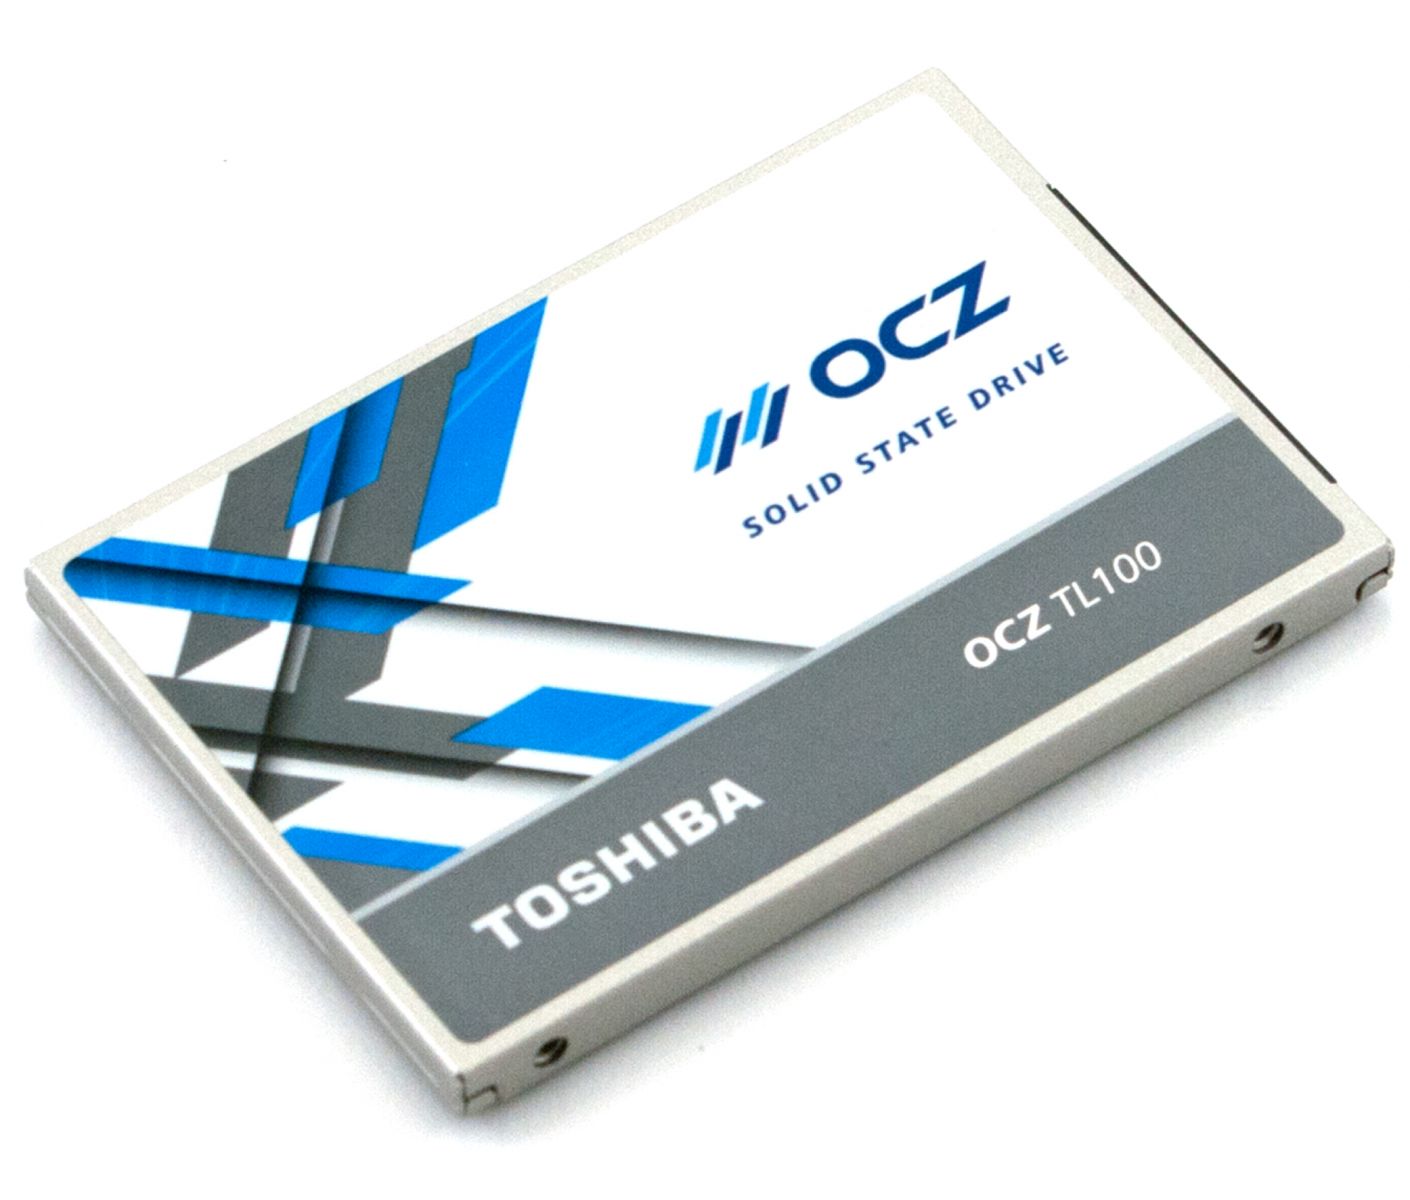 Toshiba TL100 SSD Review -